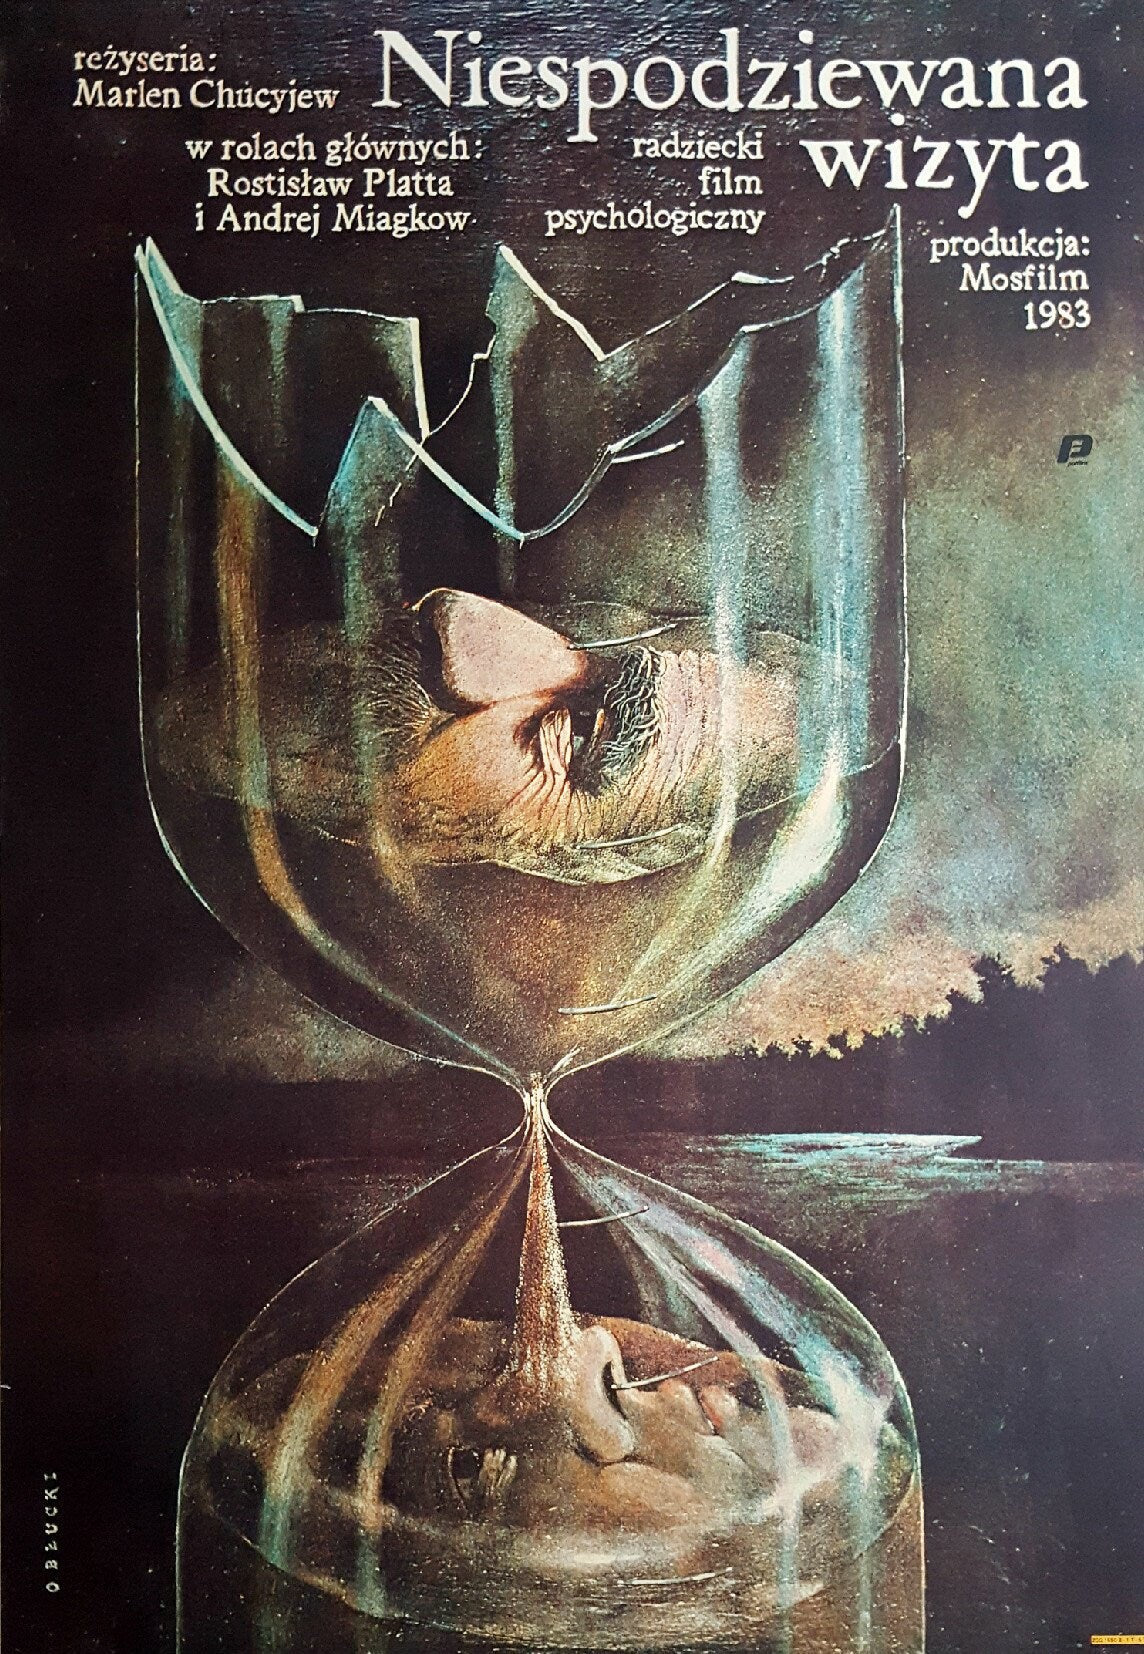 1983 Epilogue by Janusz Oblucki - Original Vintage Poster